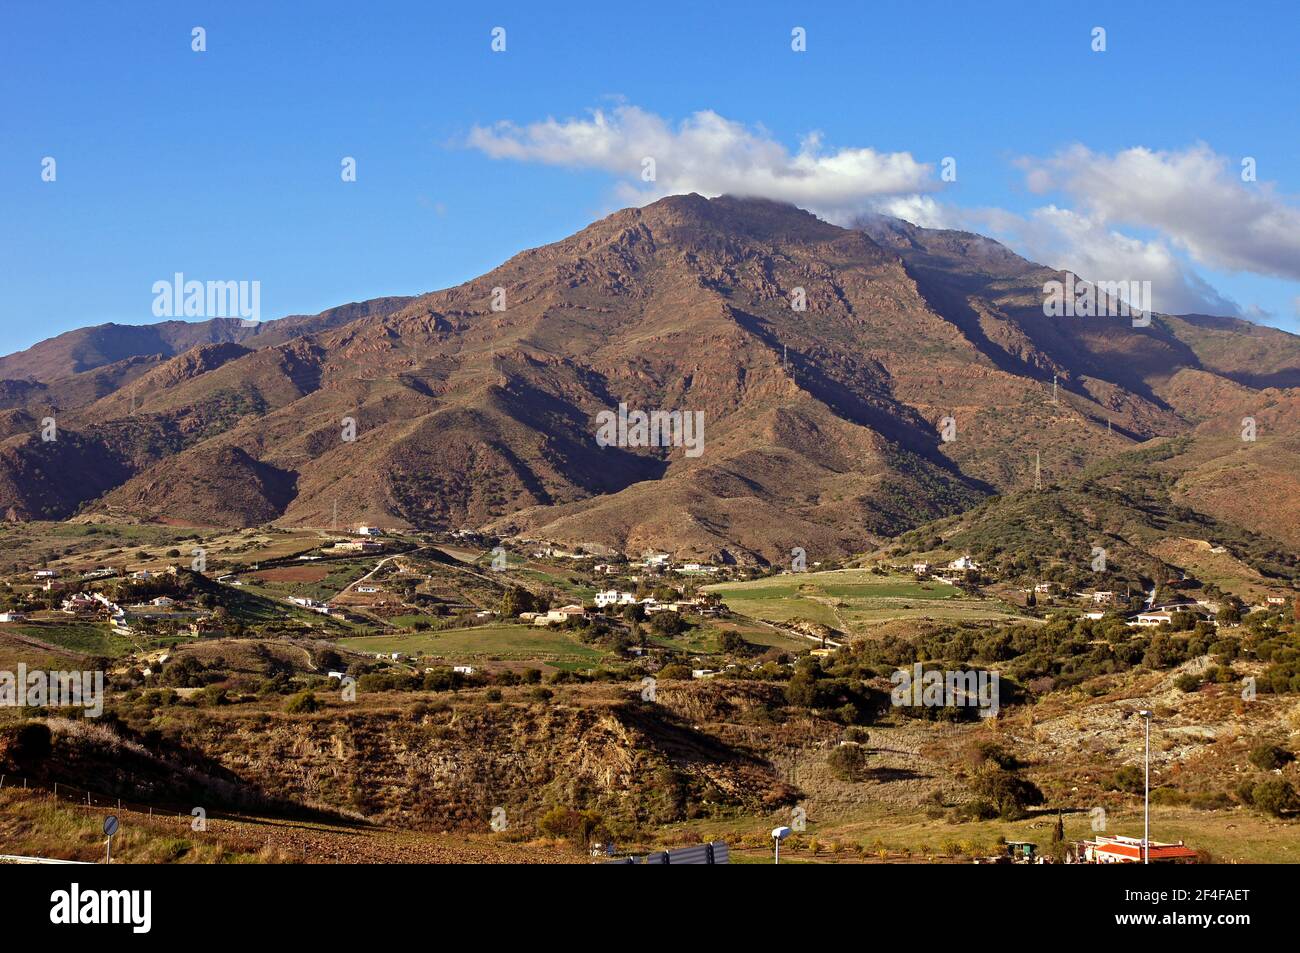 Andalucia in Spagna: La montagna 'Los Reales' alta 1400 metri sulla Costa del Sol vicino Estepona Foto Stock